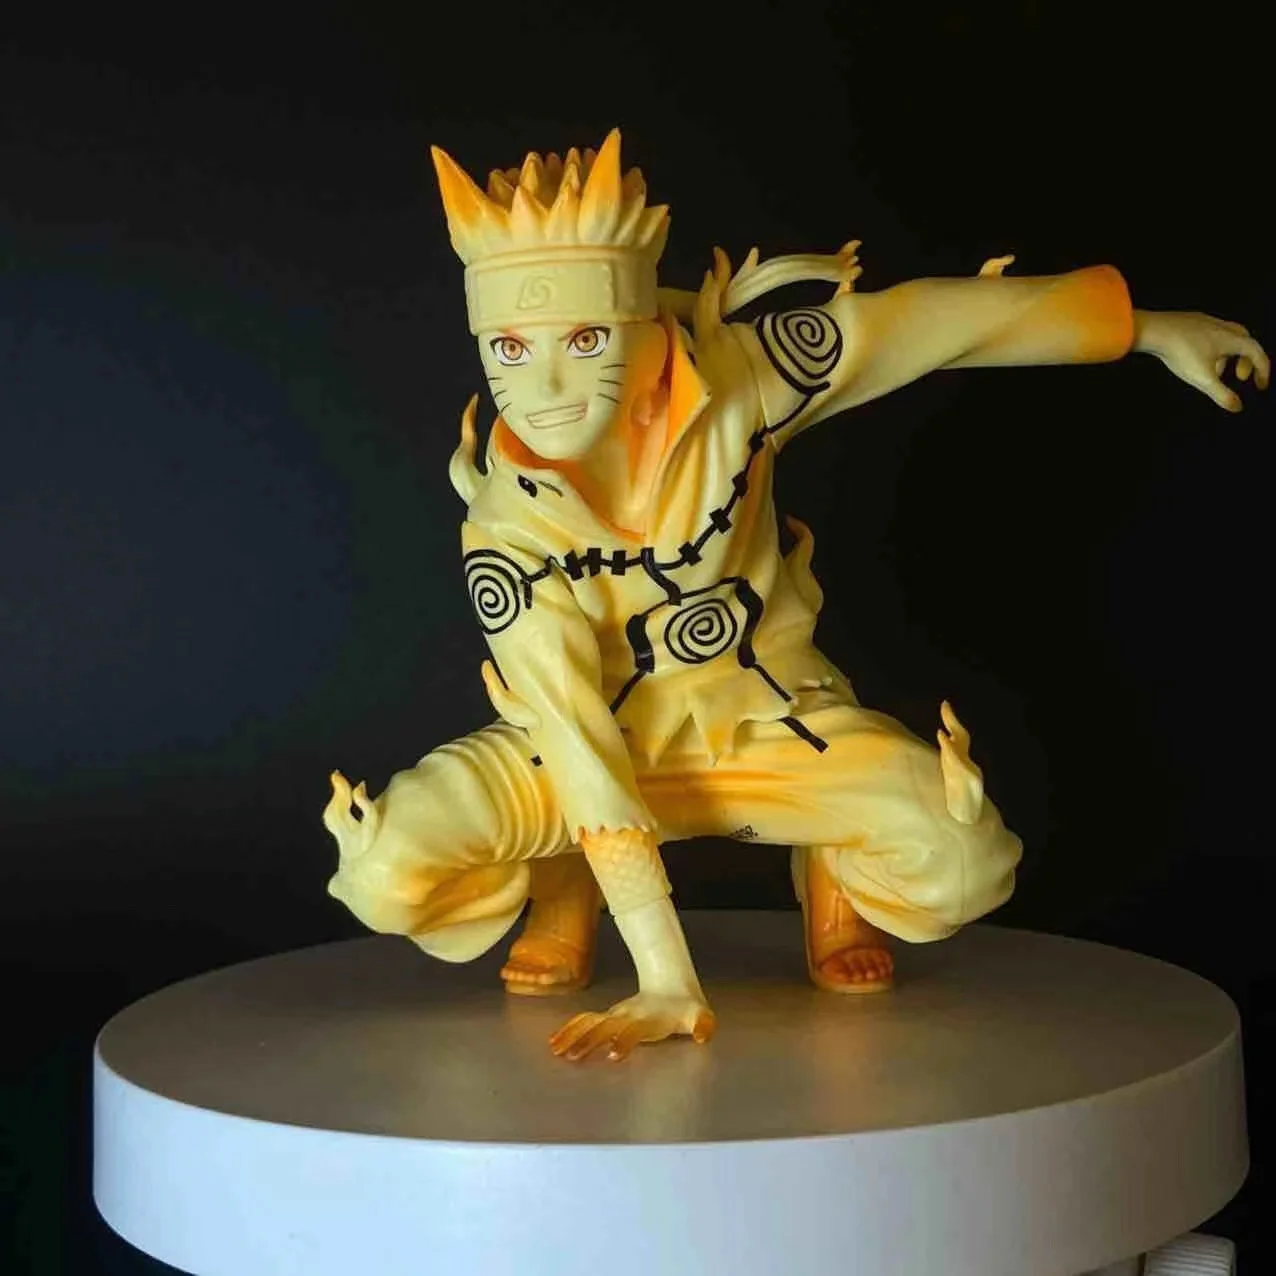 Panel Asli Tontonan Naruto Action Figure Model Mainan Anime Figuralscar Konsol Tengah Ornamen Mainan Stand Kartu Kodok - 0